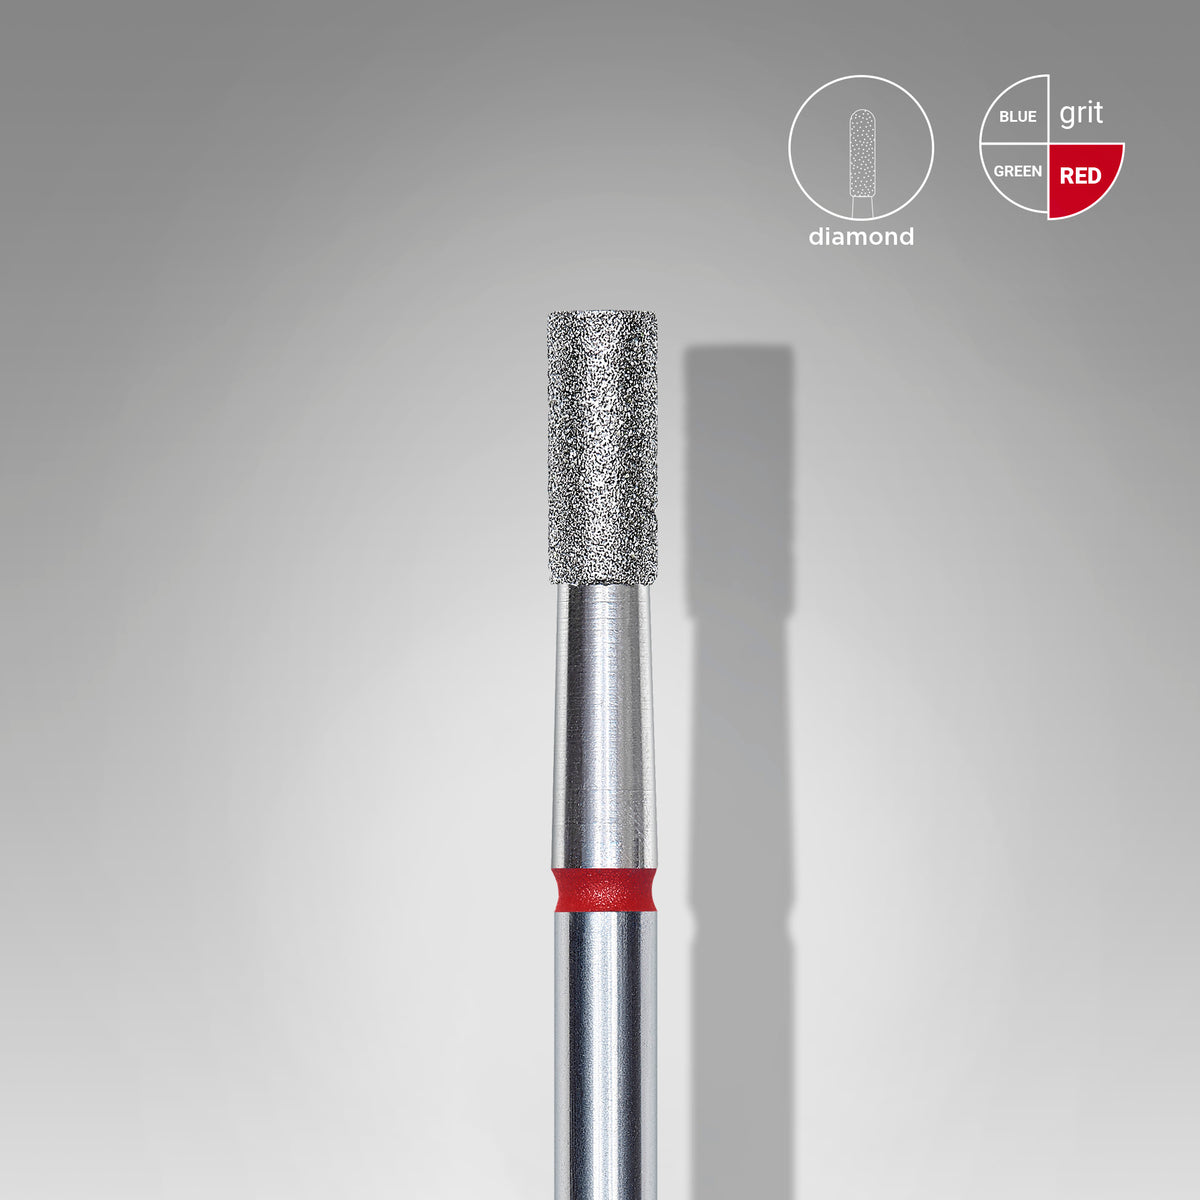 Diamond nail drill bit "cylinder", red, head diameter 2.5 mm, working part 6 mm